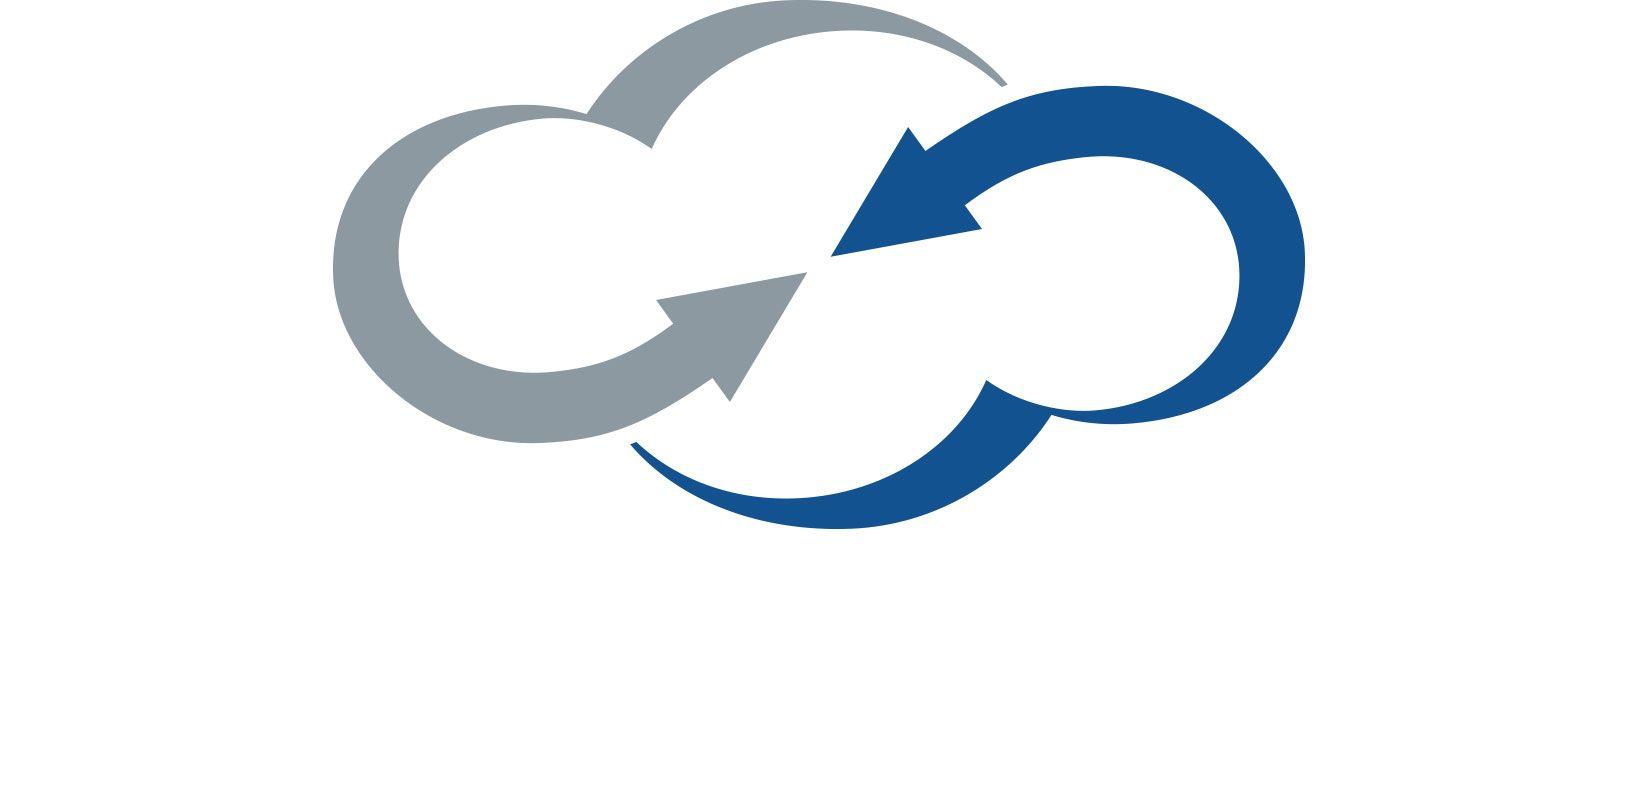 Cloud Computing Logo - RBMM Brand Design Studio. Crosscloud Computing Logo